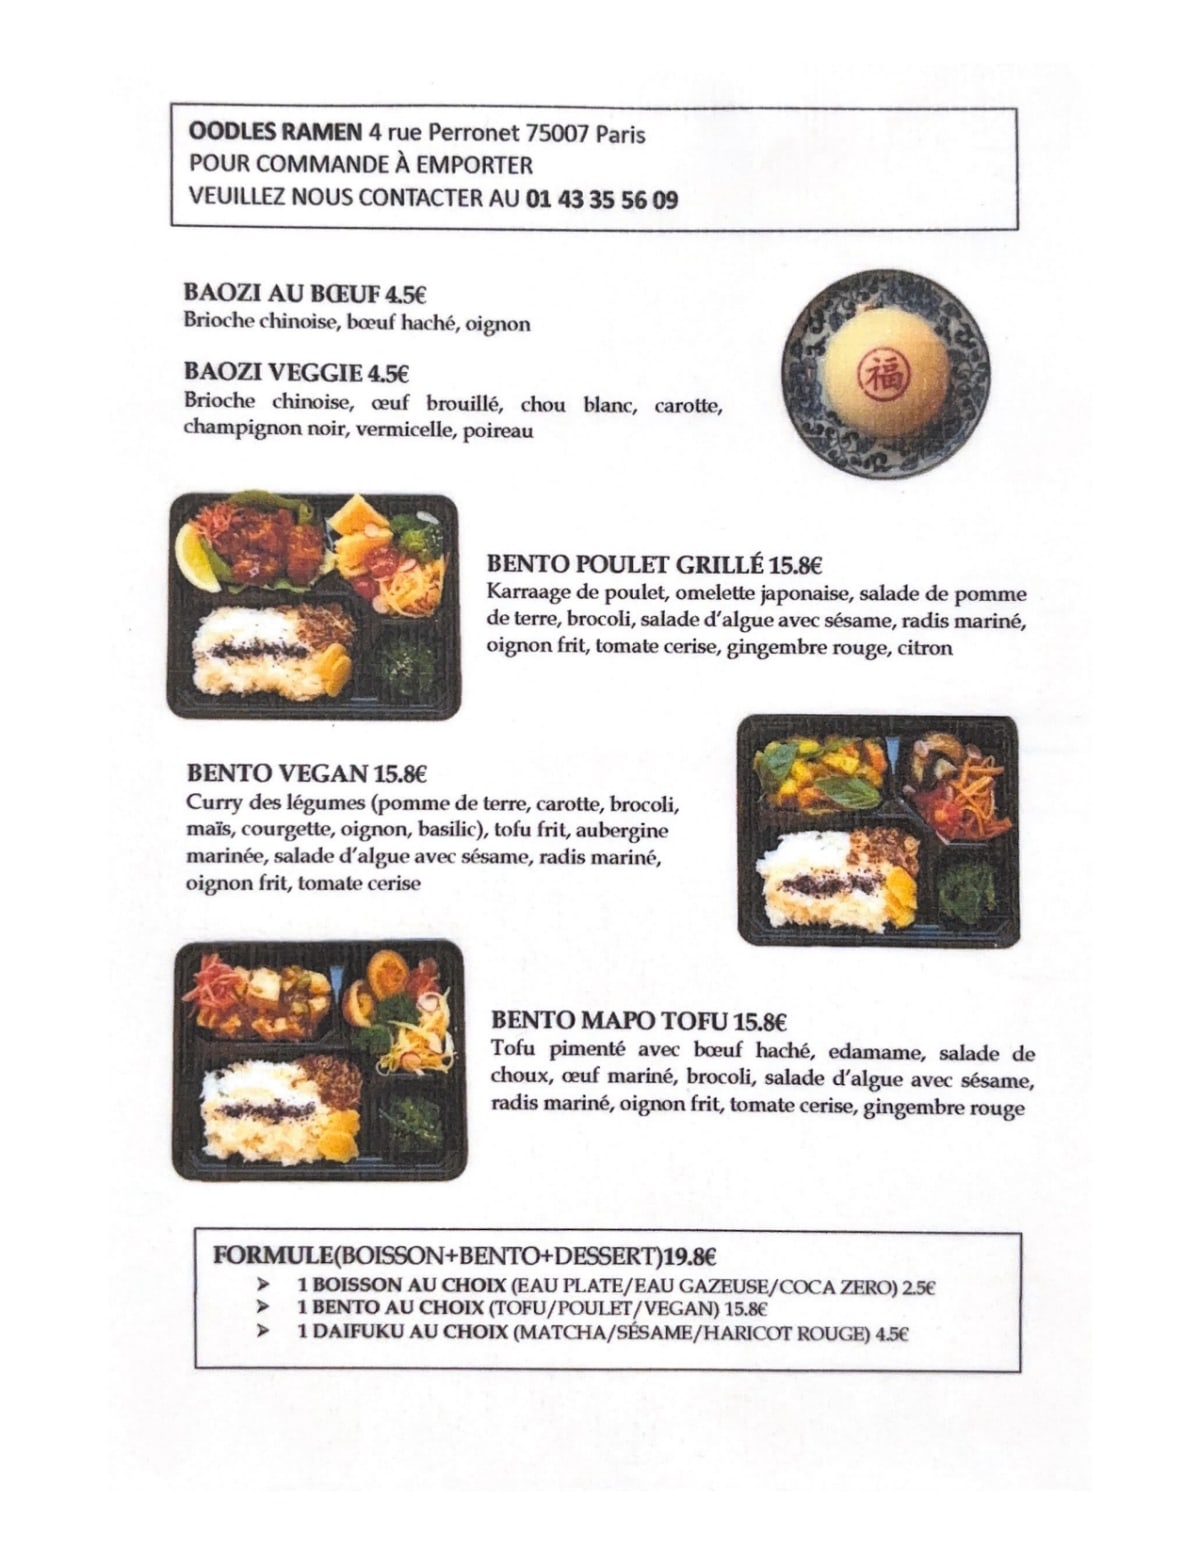 Oodles Ramen menu